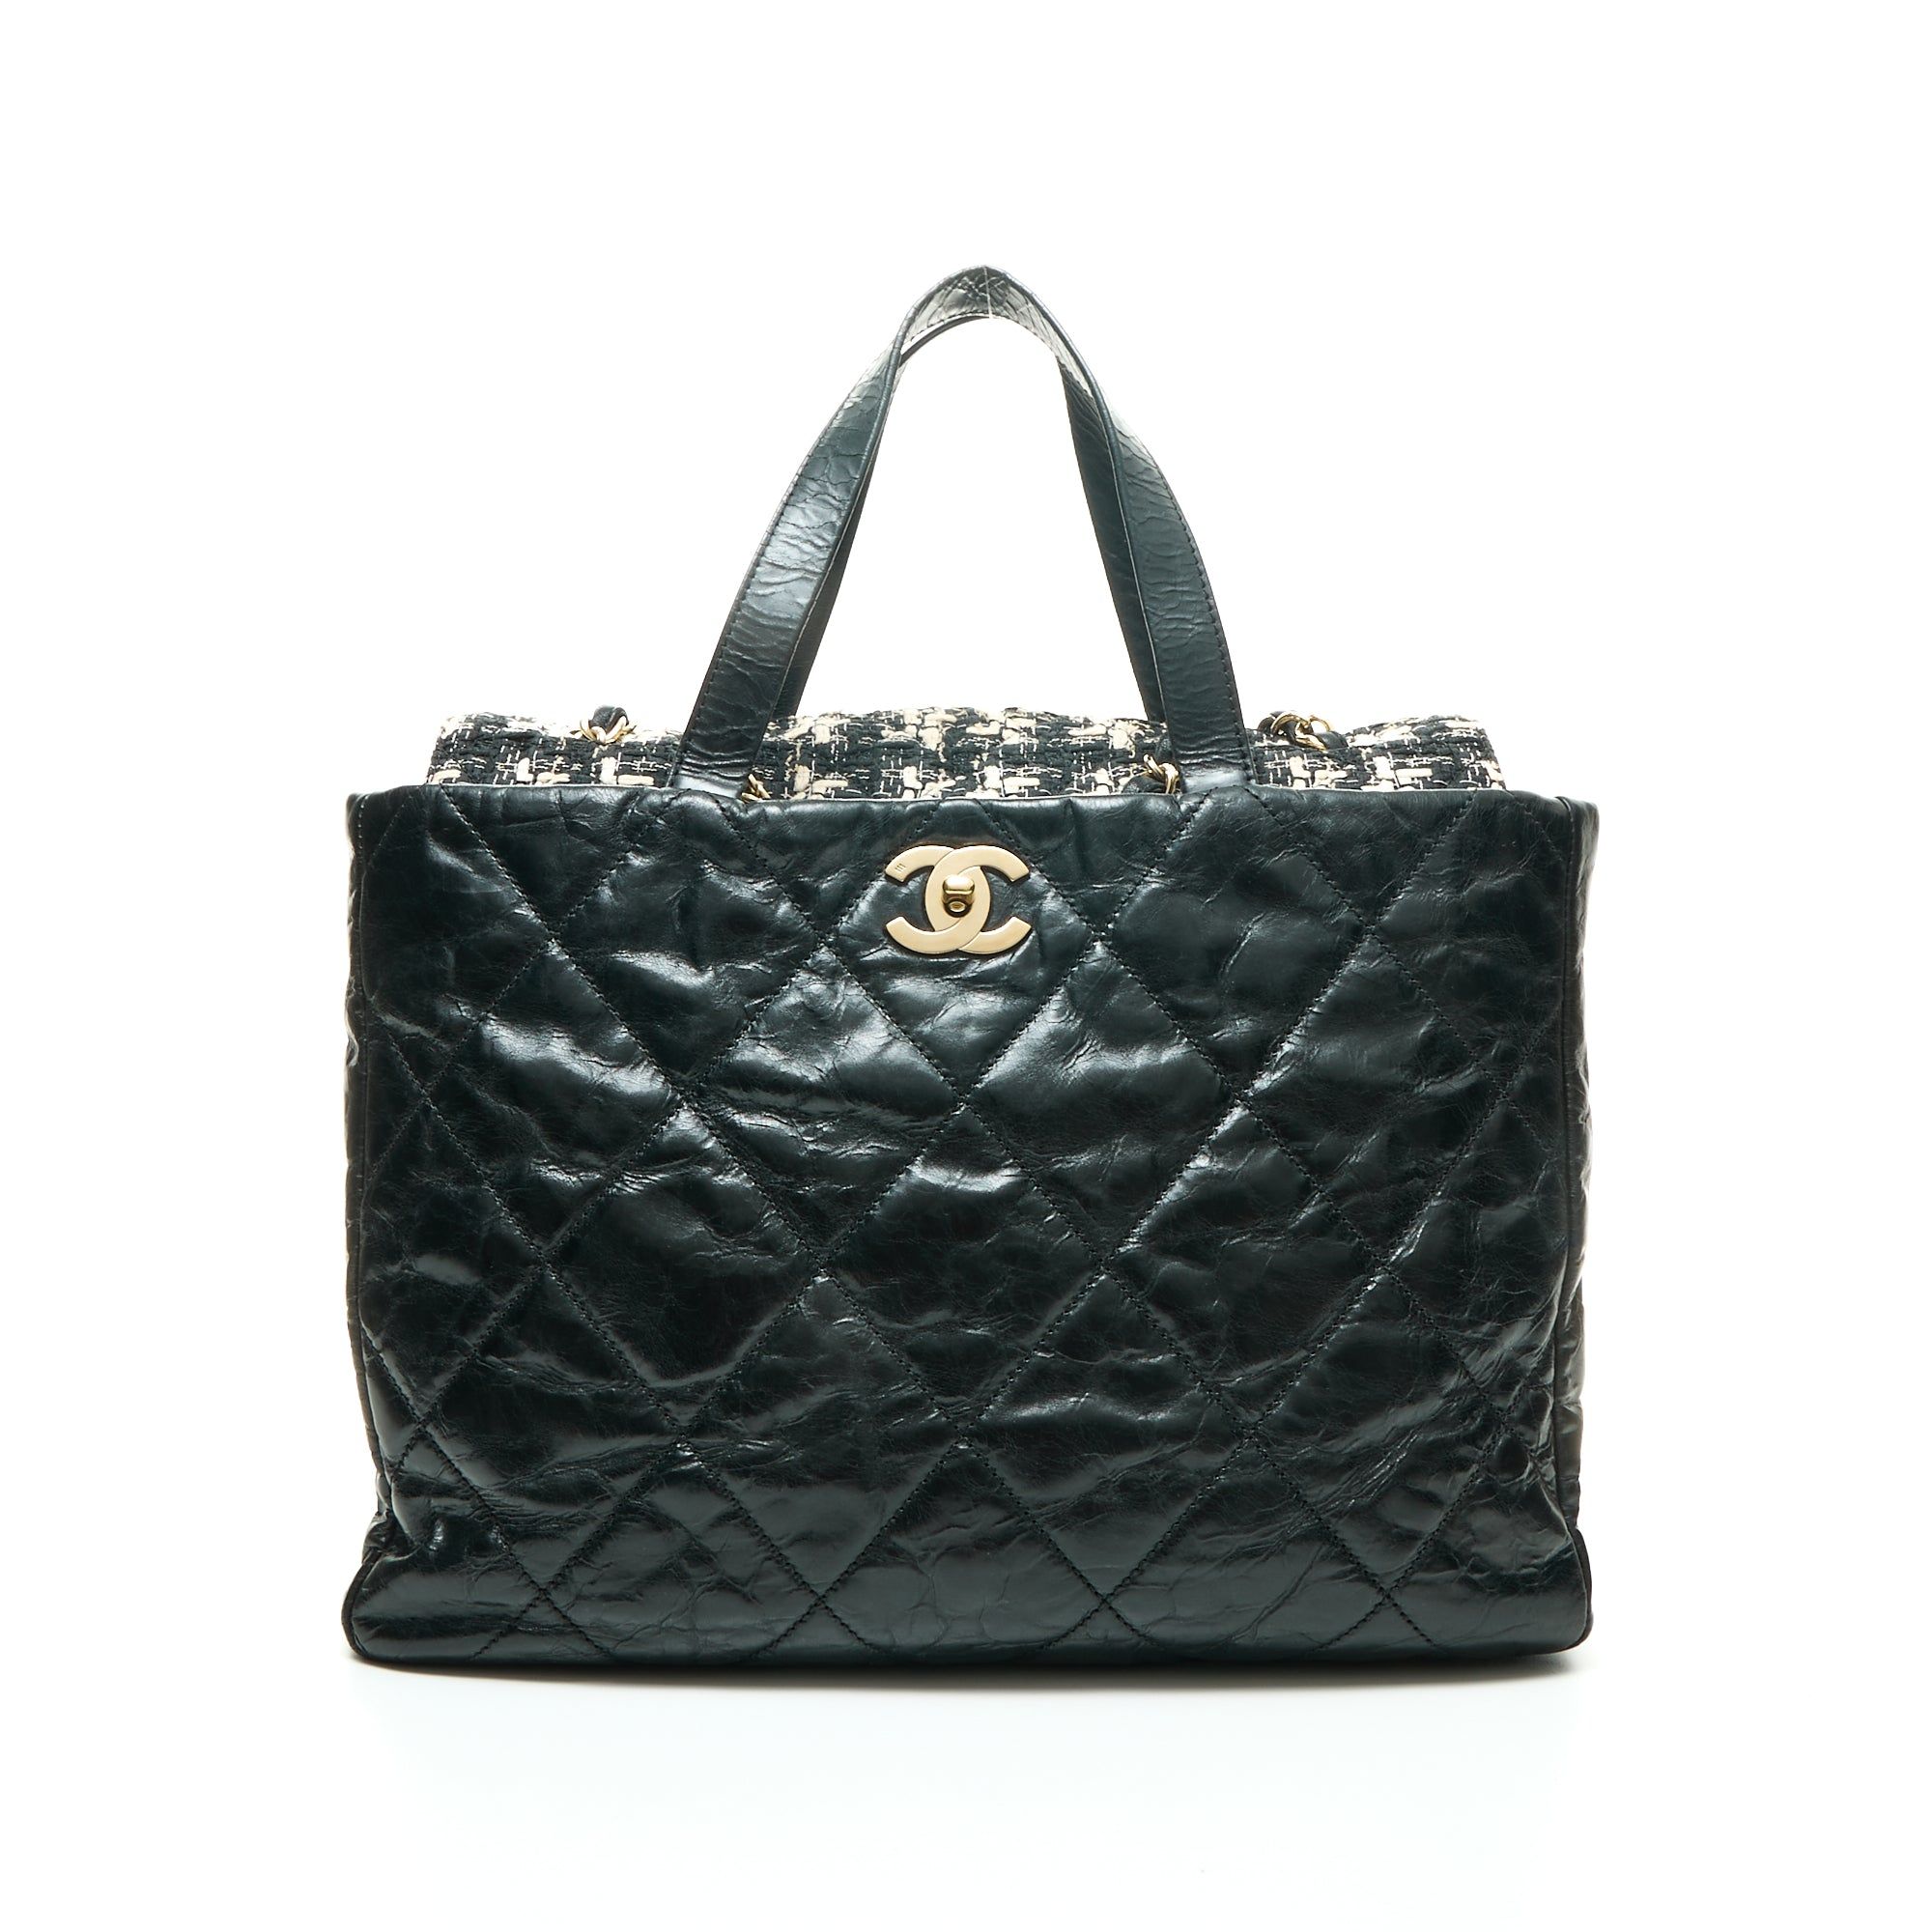 Chanel Portobello Two-Way Tote bag in Calfskin, Light gold Hardware Black